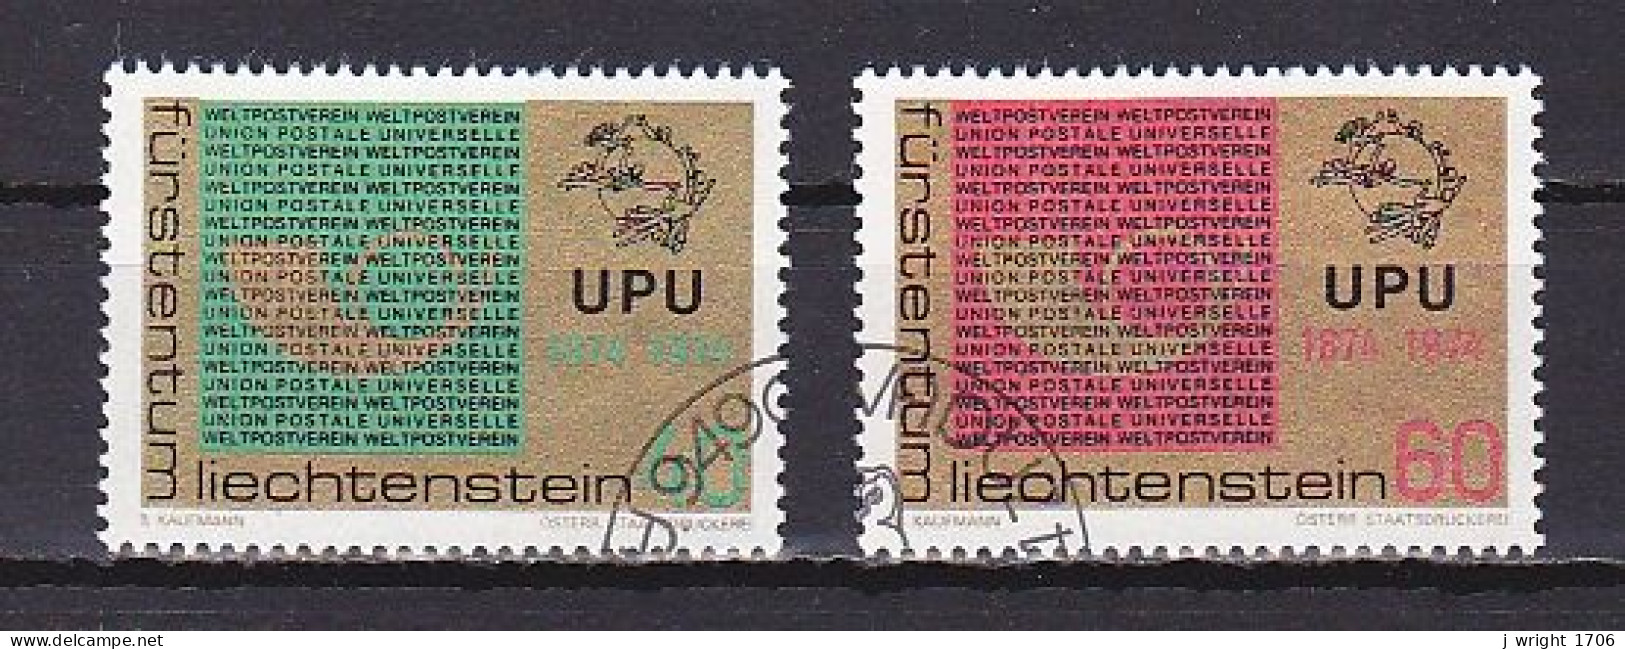 Liechtenstein, 1974, UPU Centenary, Set, CTO - Usati